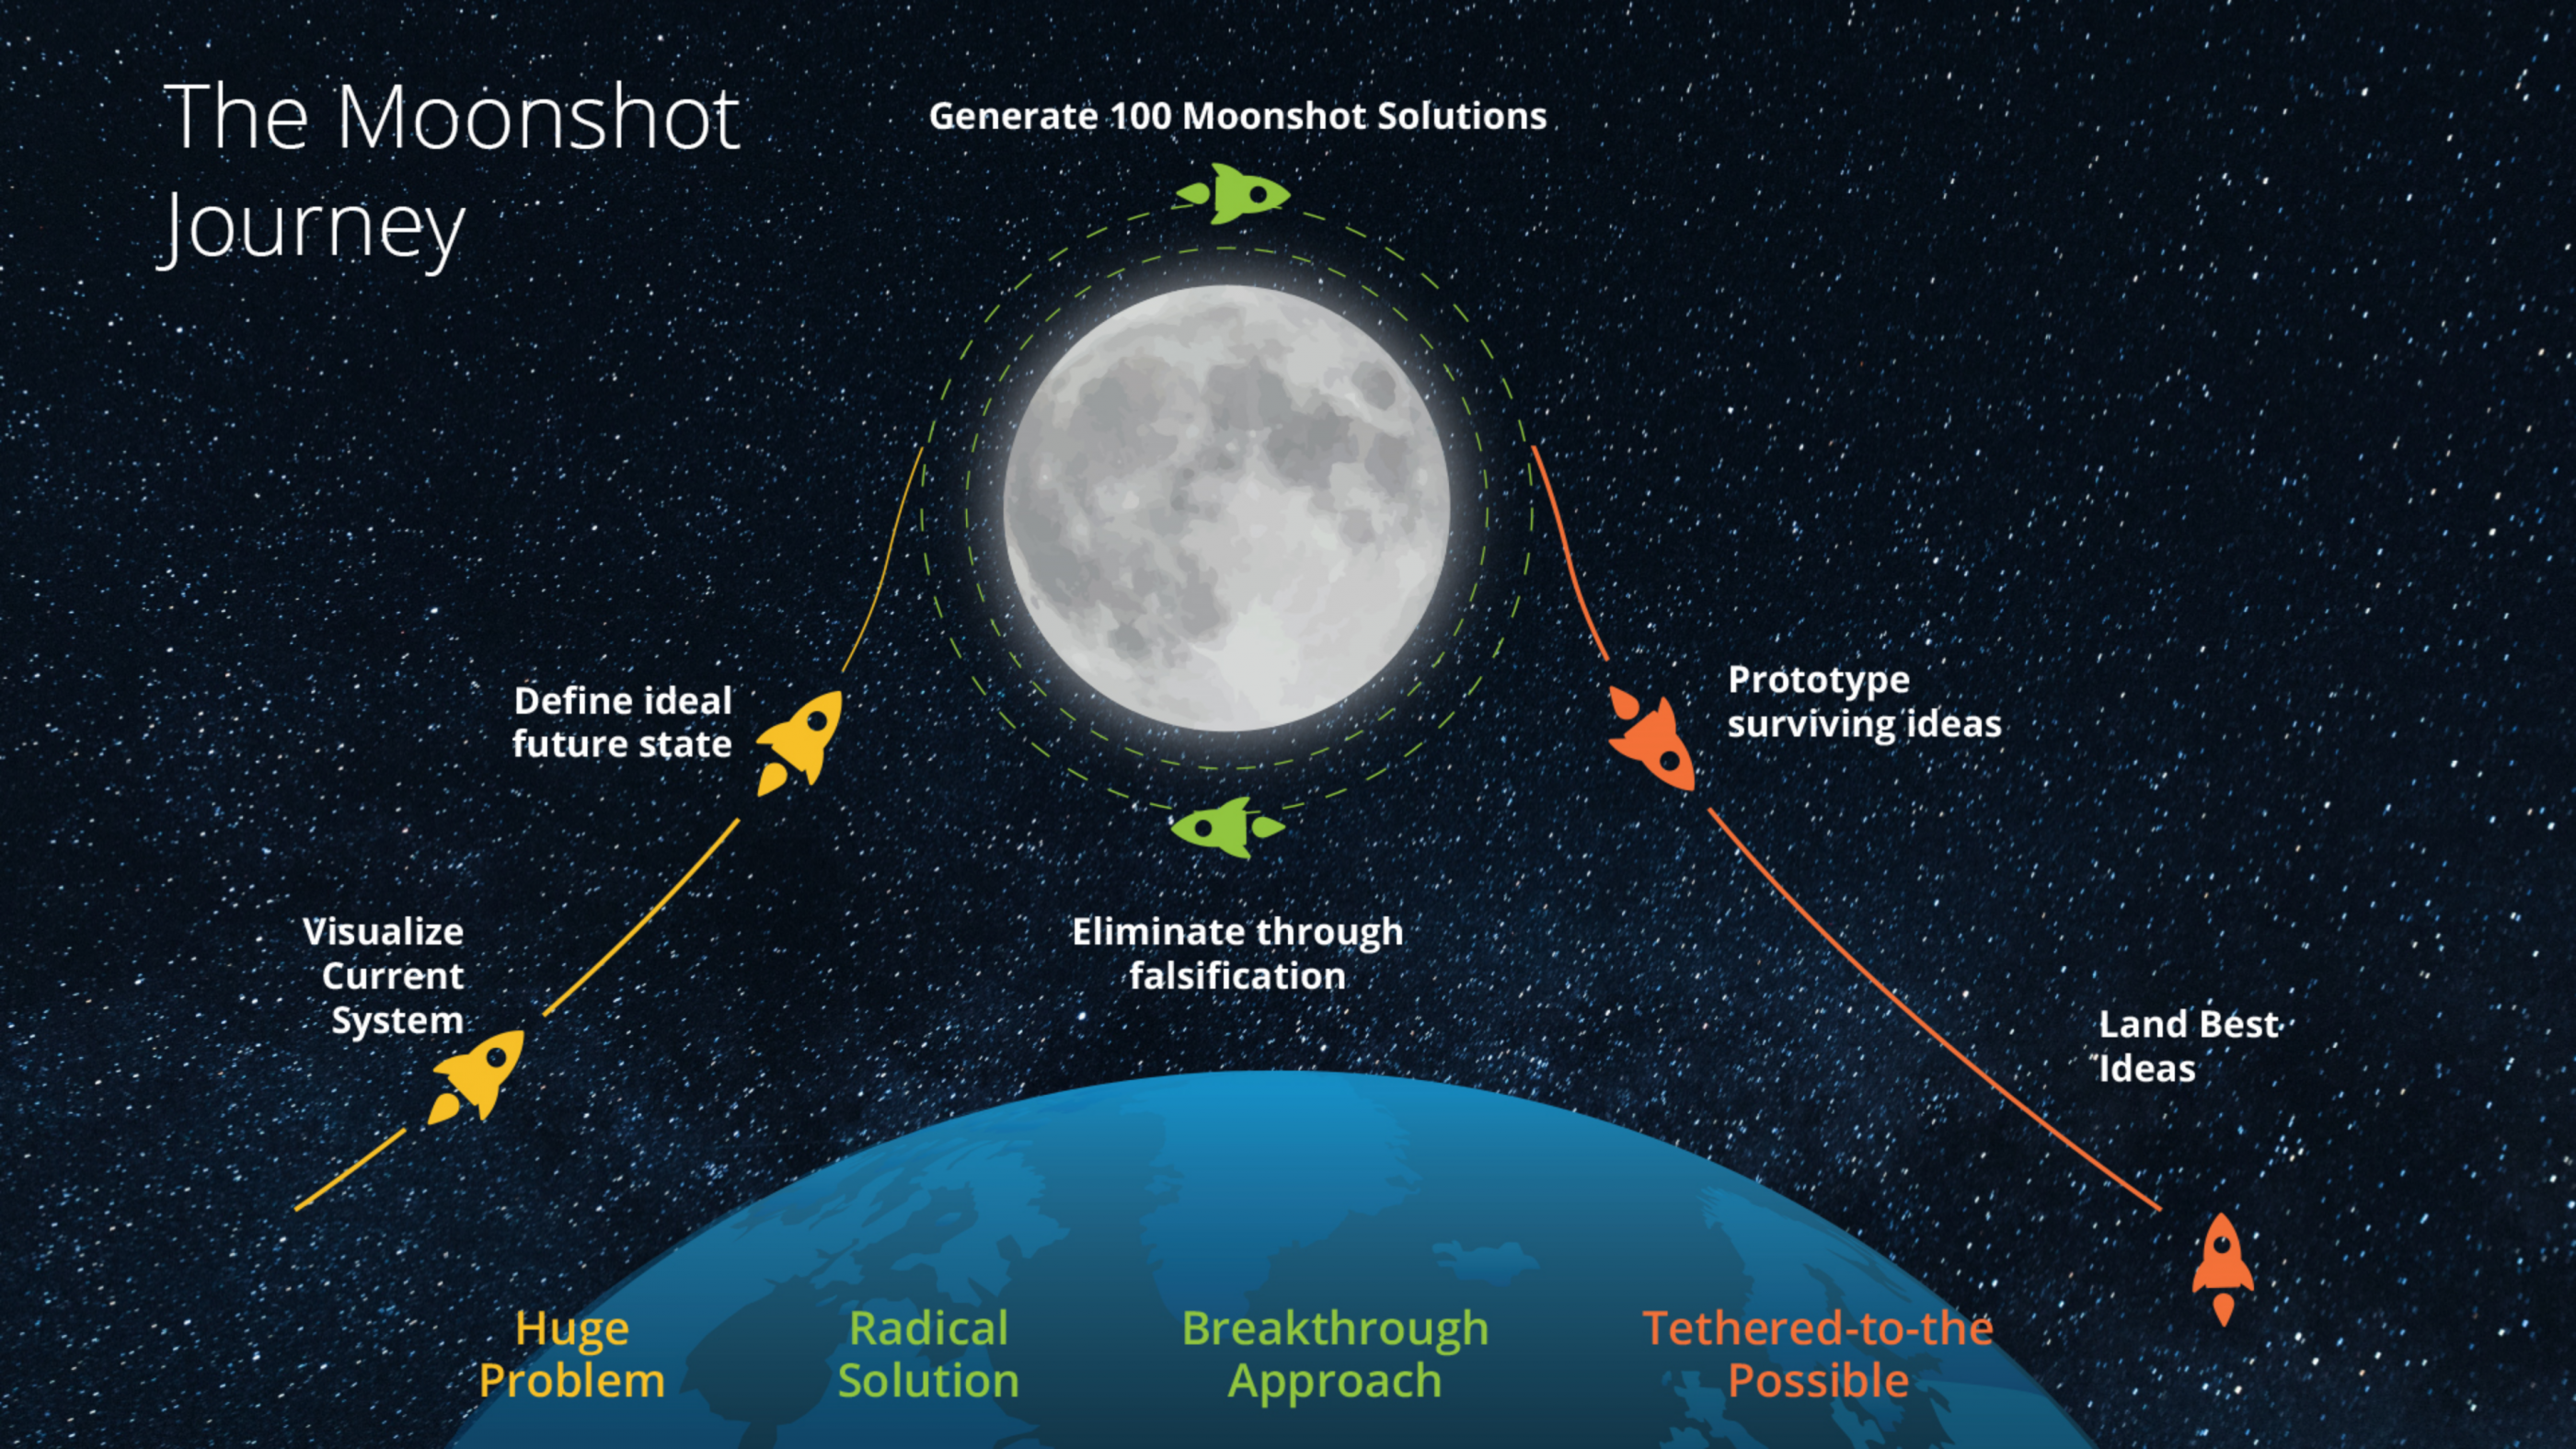 Image: The Moonshot Journey